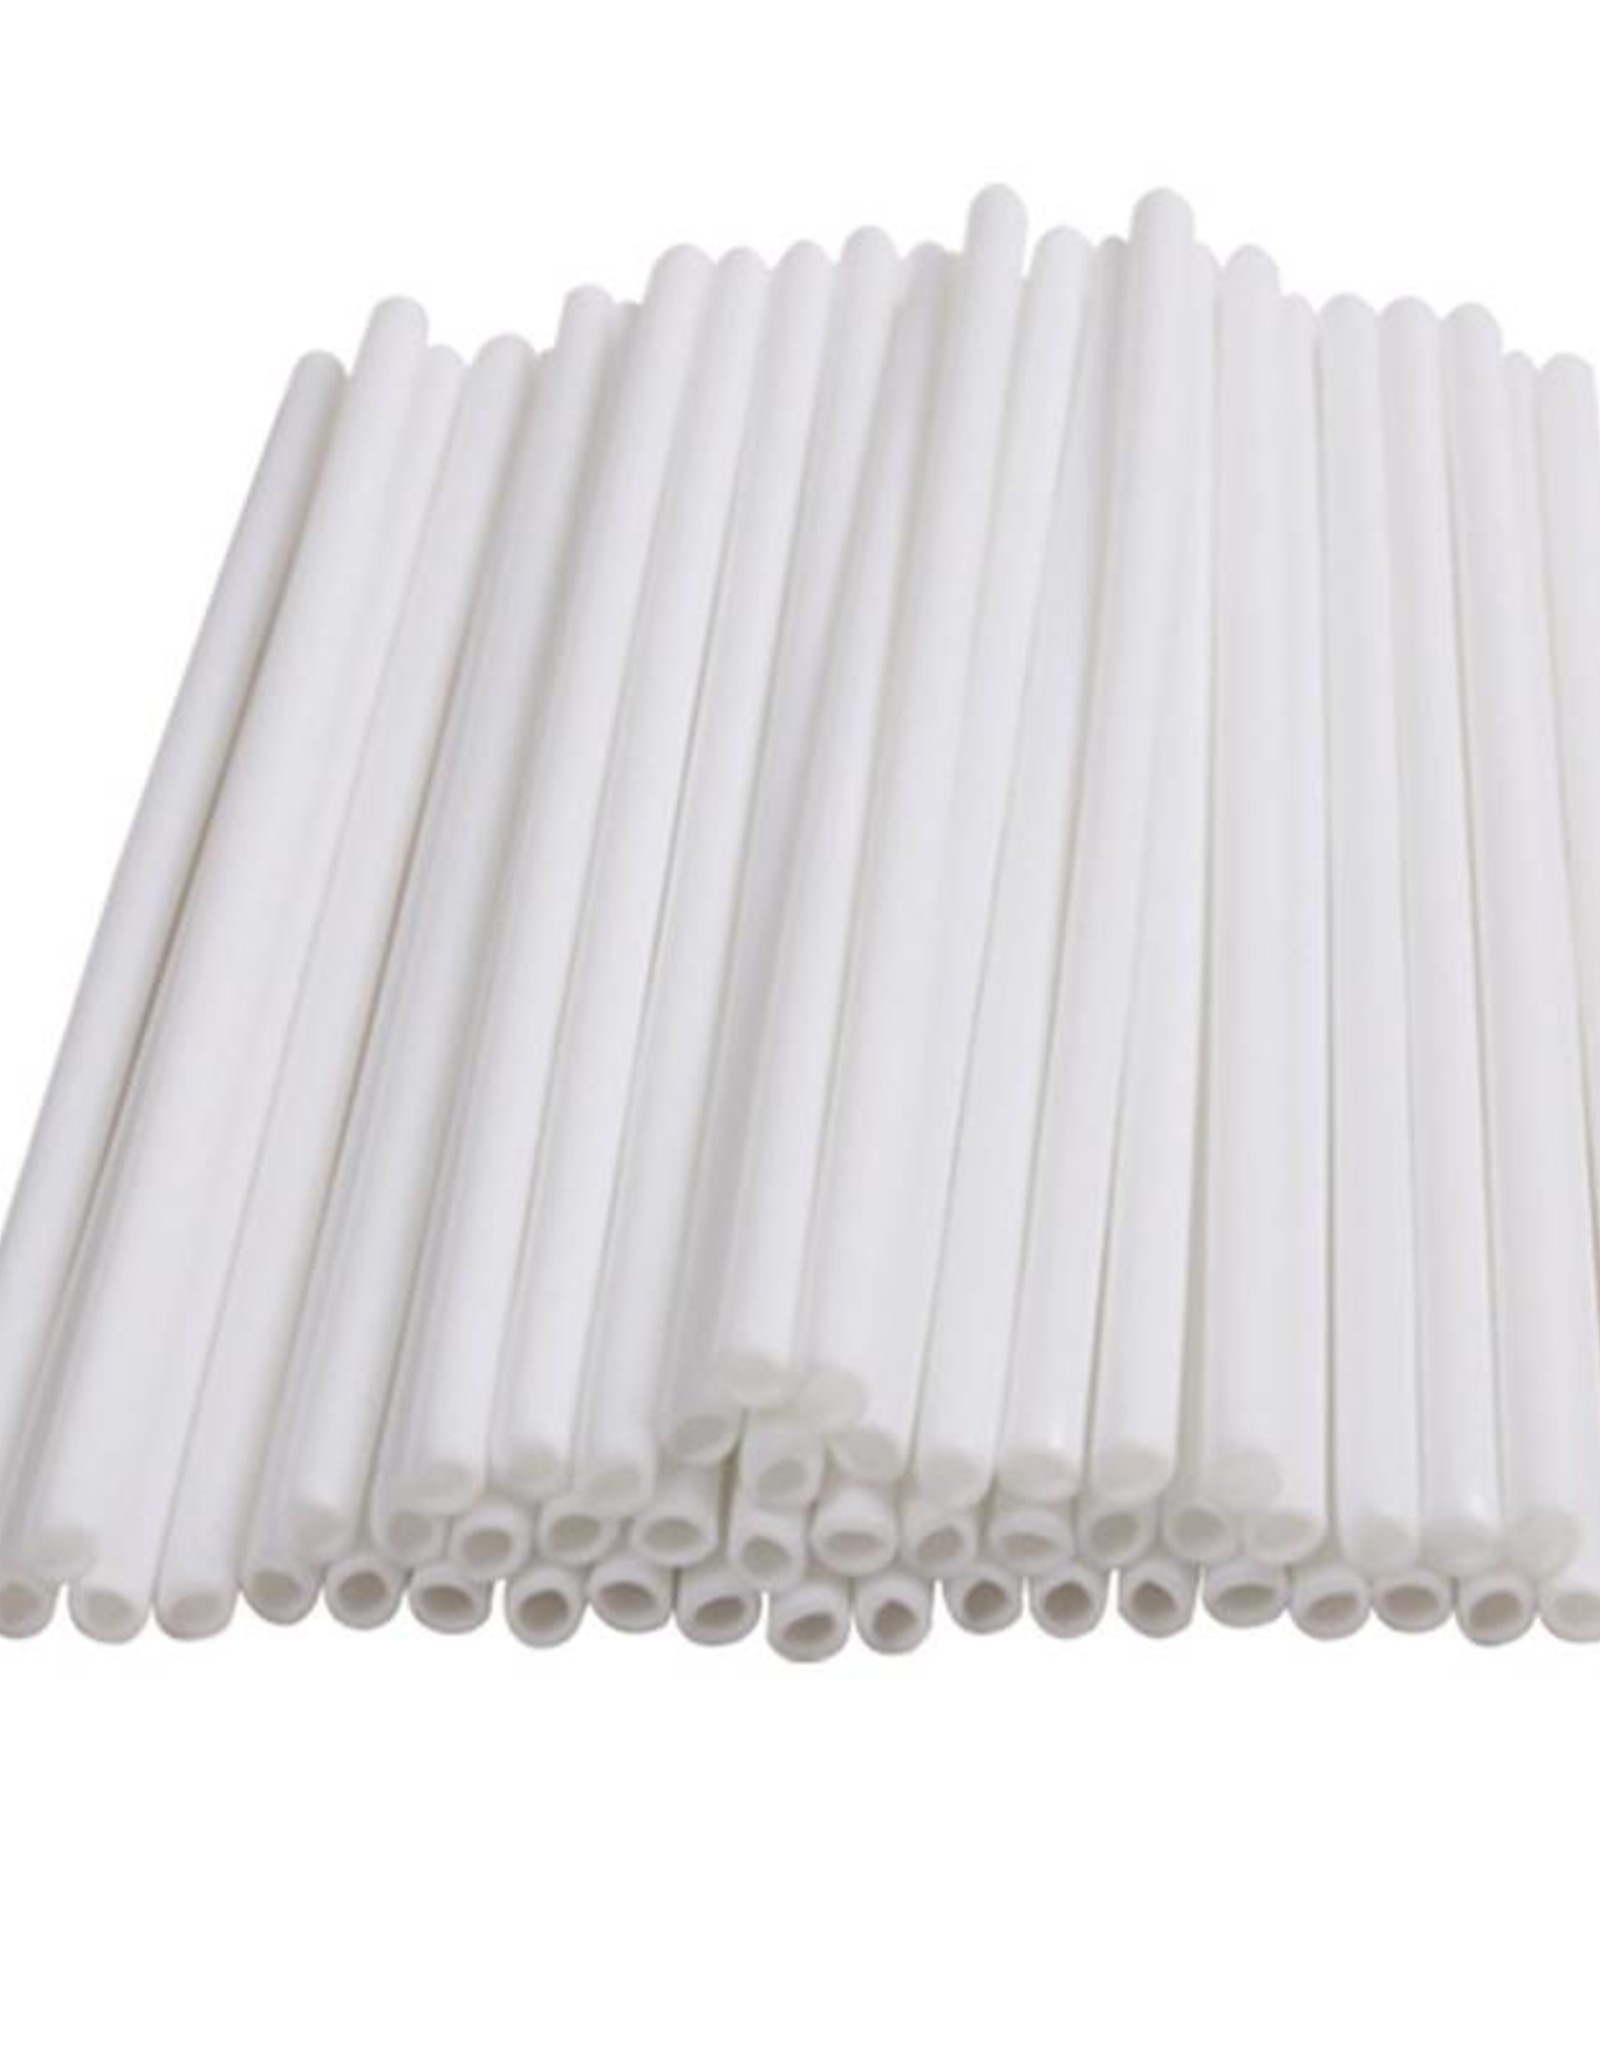 Plastic Sucker Sticks (White 4.5 inch)